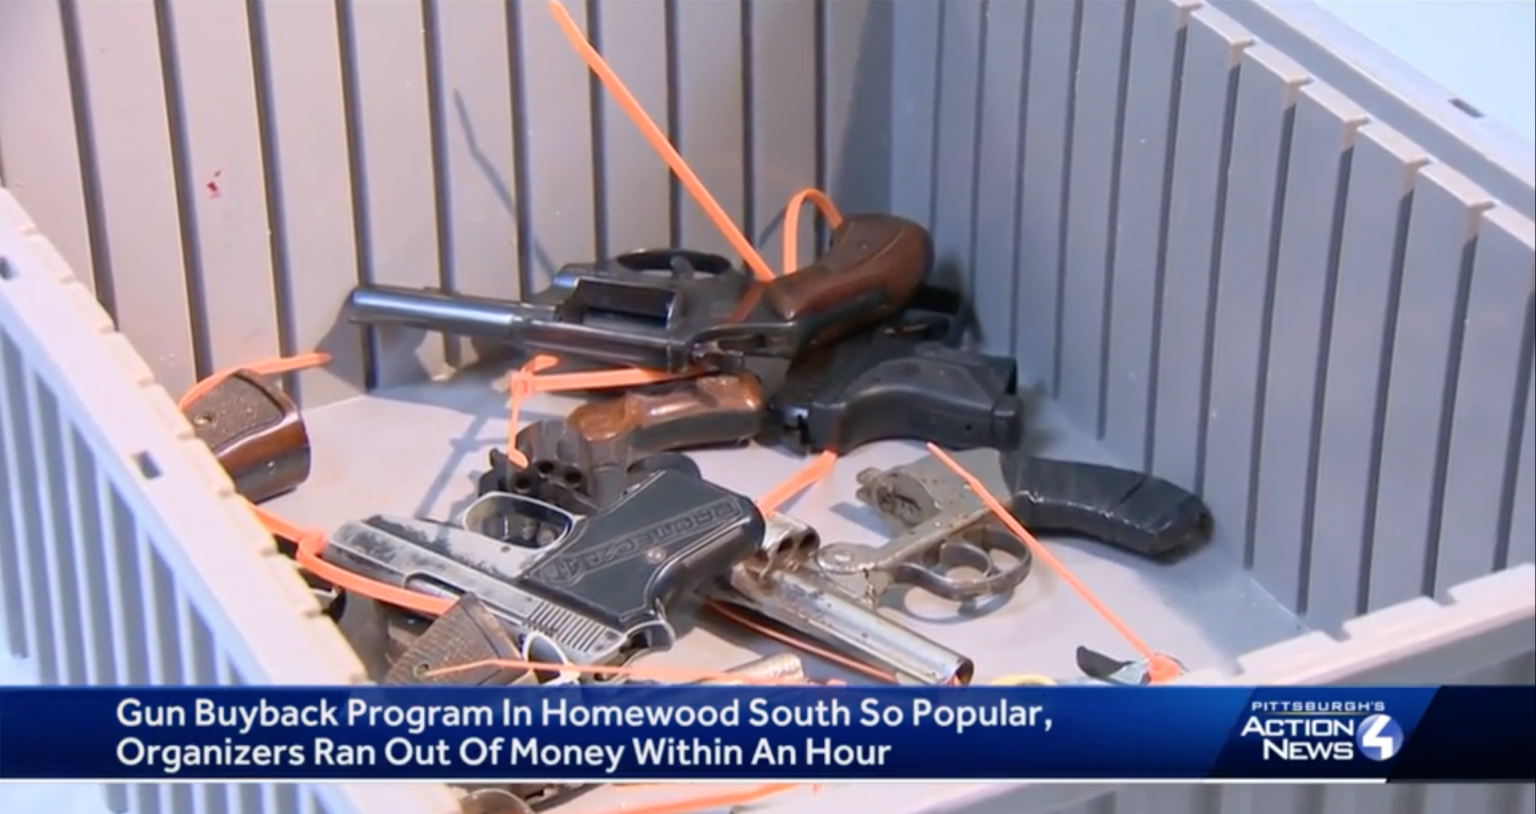 Pittsburgh church hosts gun buyback, runs out of money CarbonTV